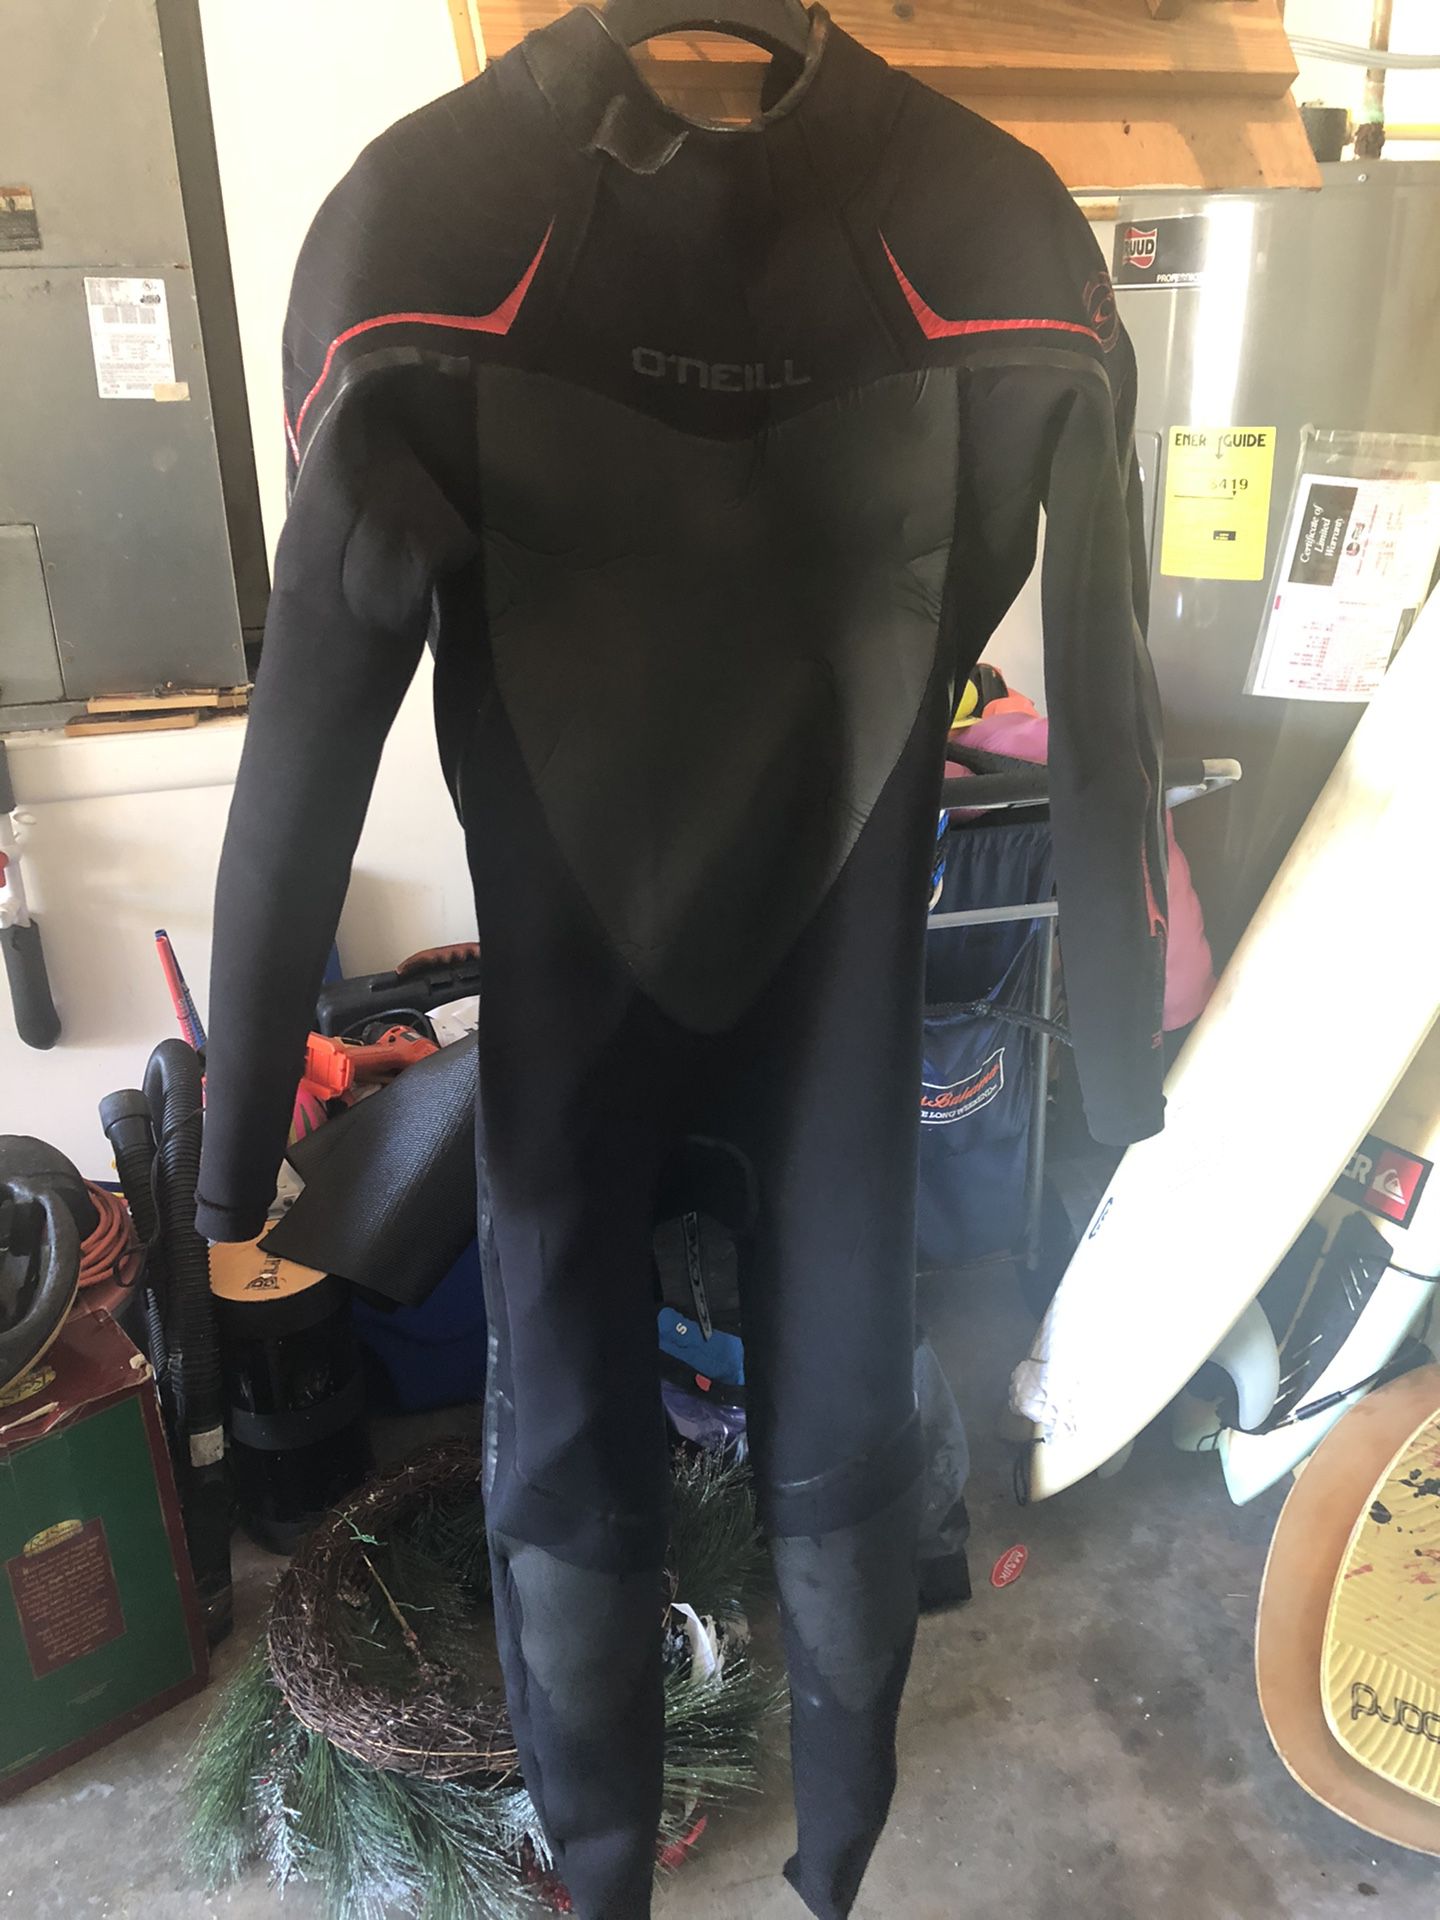 Rip Curl Pyscho 2 3/2mm L full wetsuit